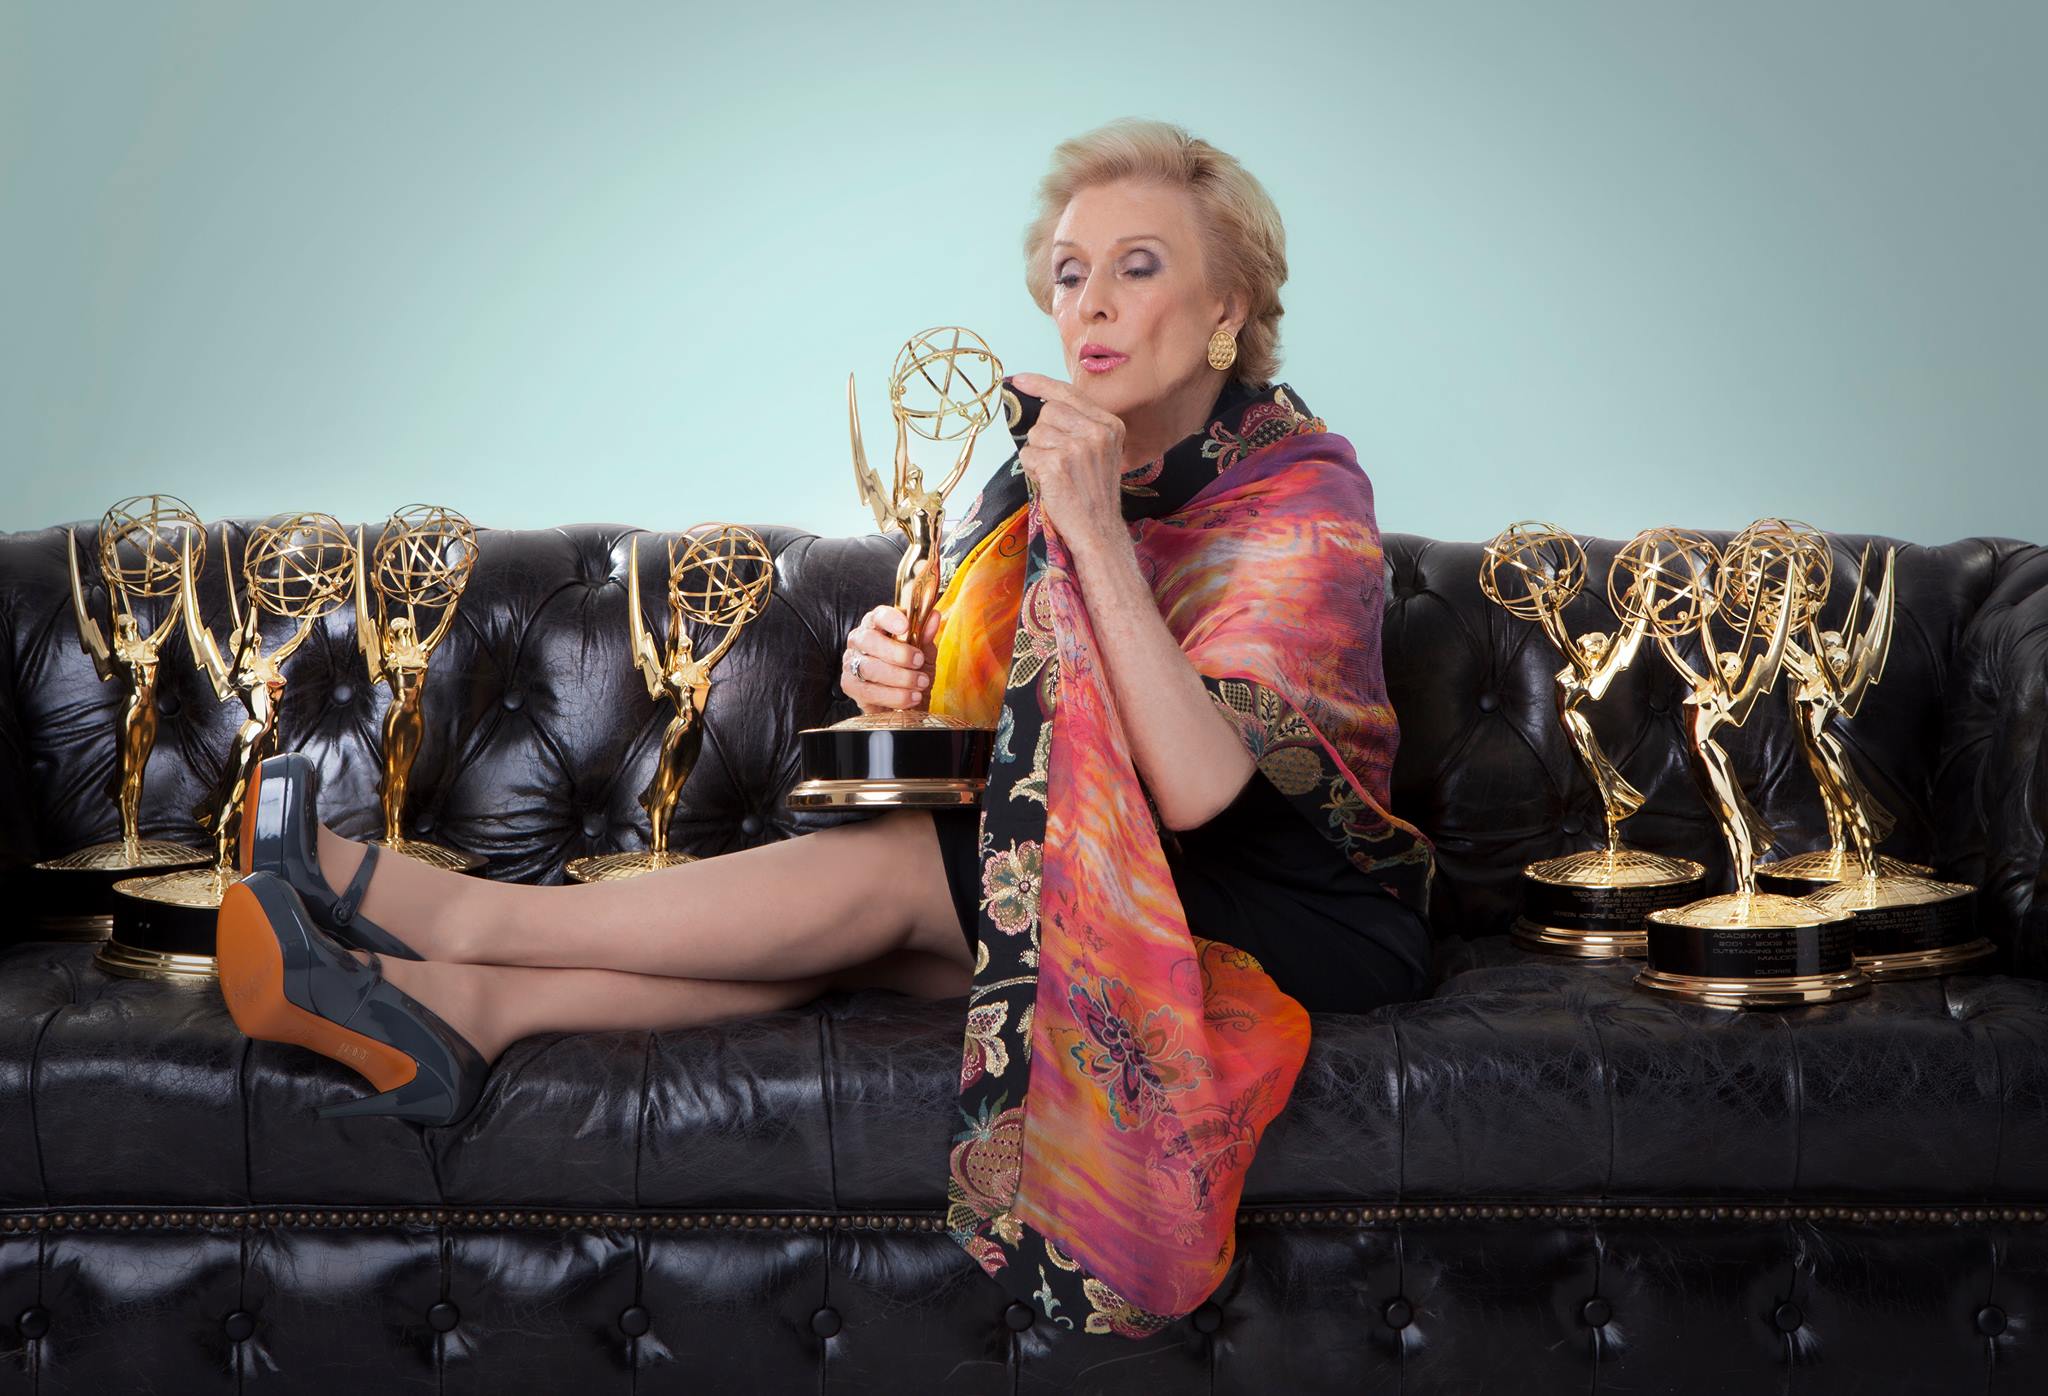 94YearOld Cloris Leachman Talks About Her Favorite Movie Roles